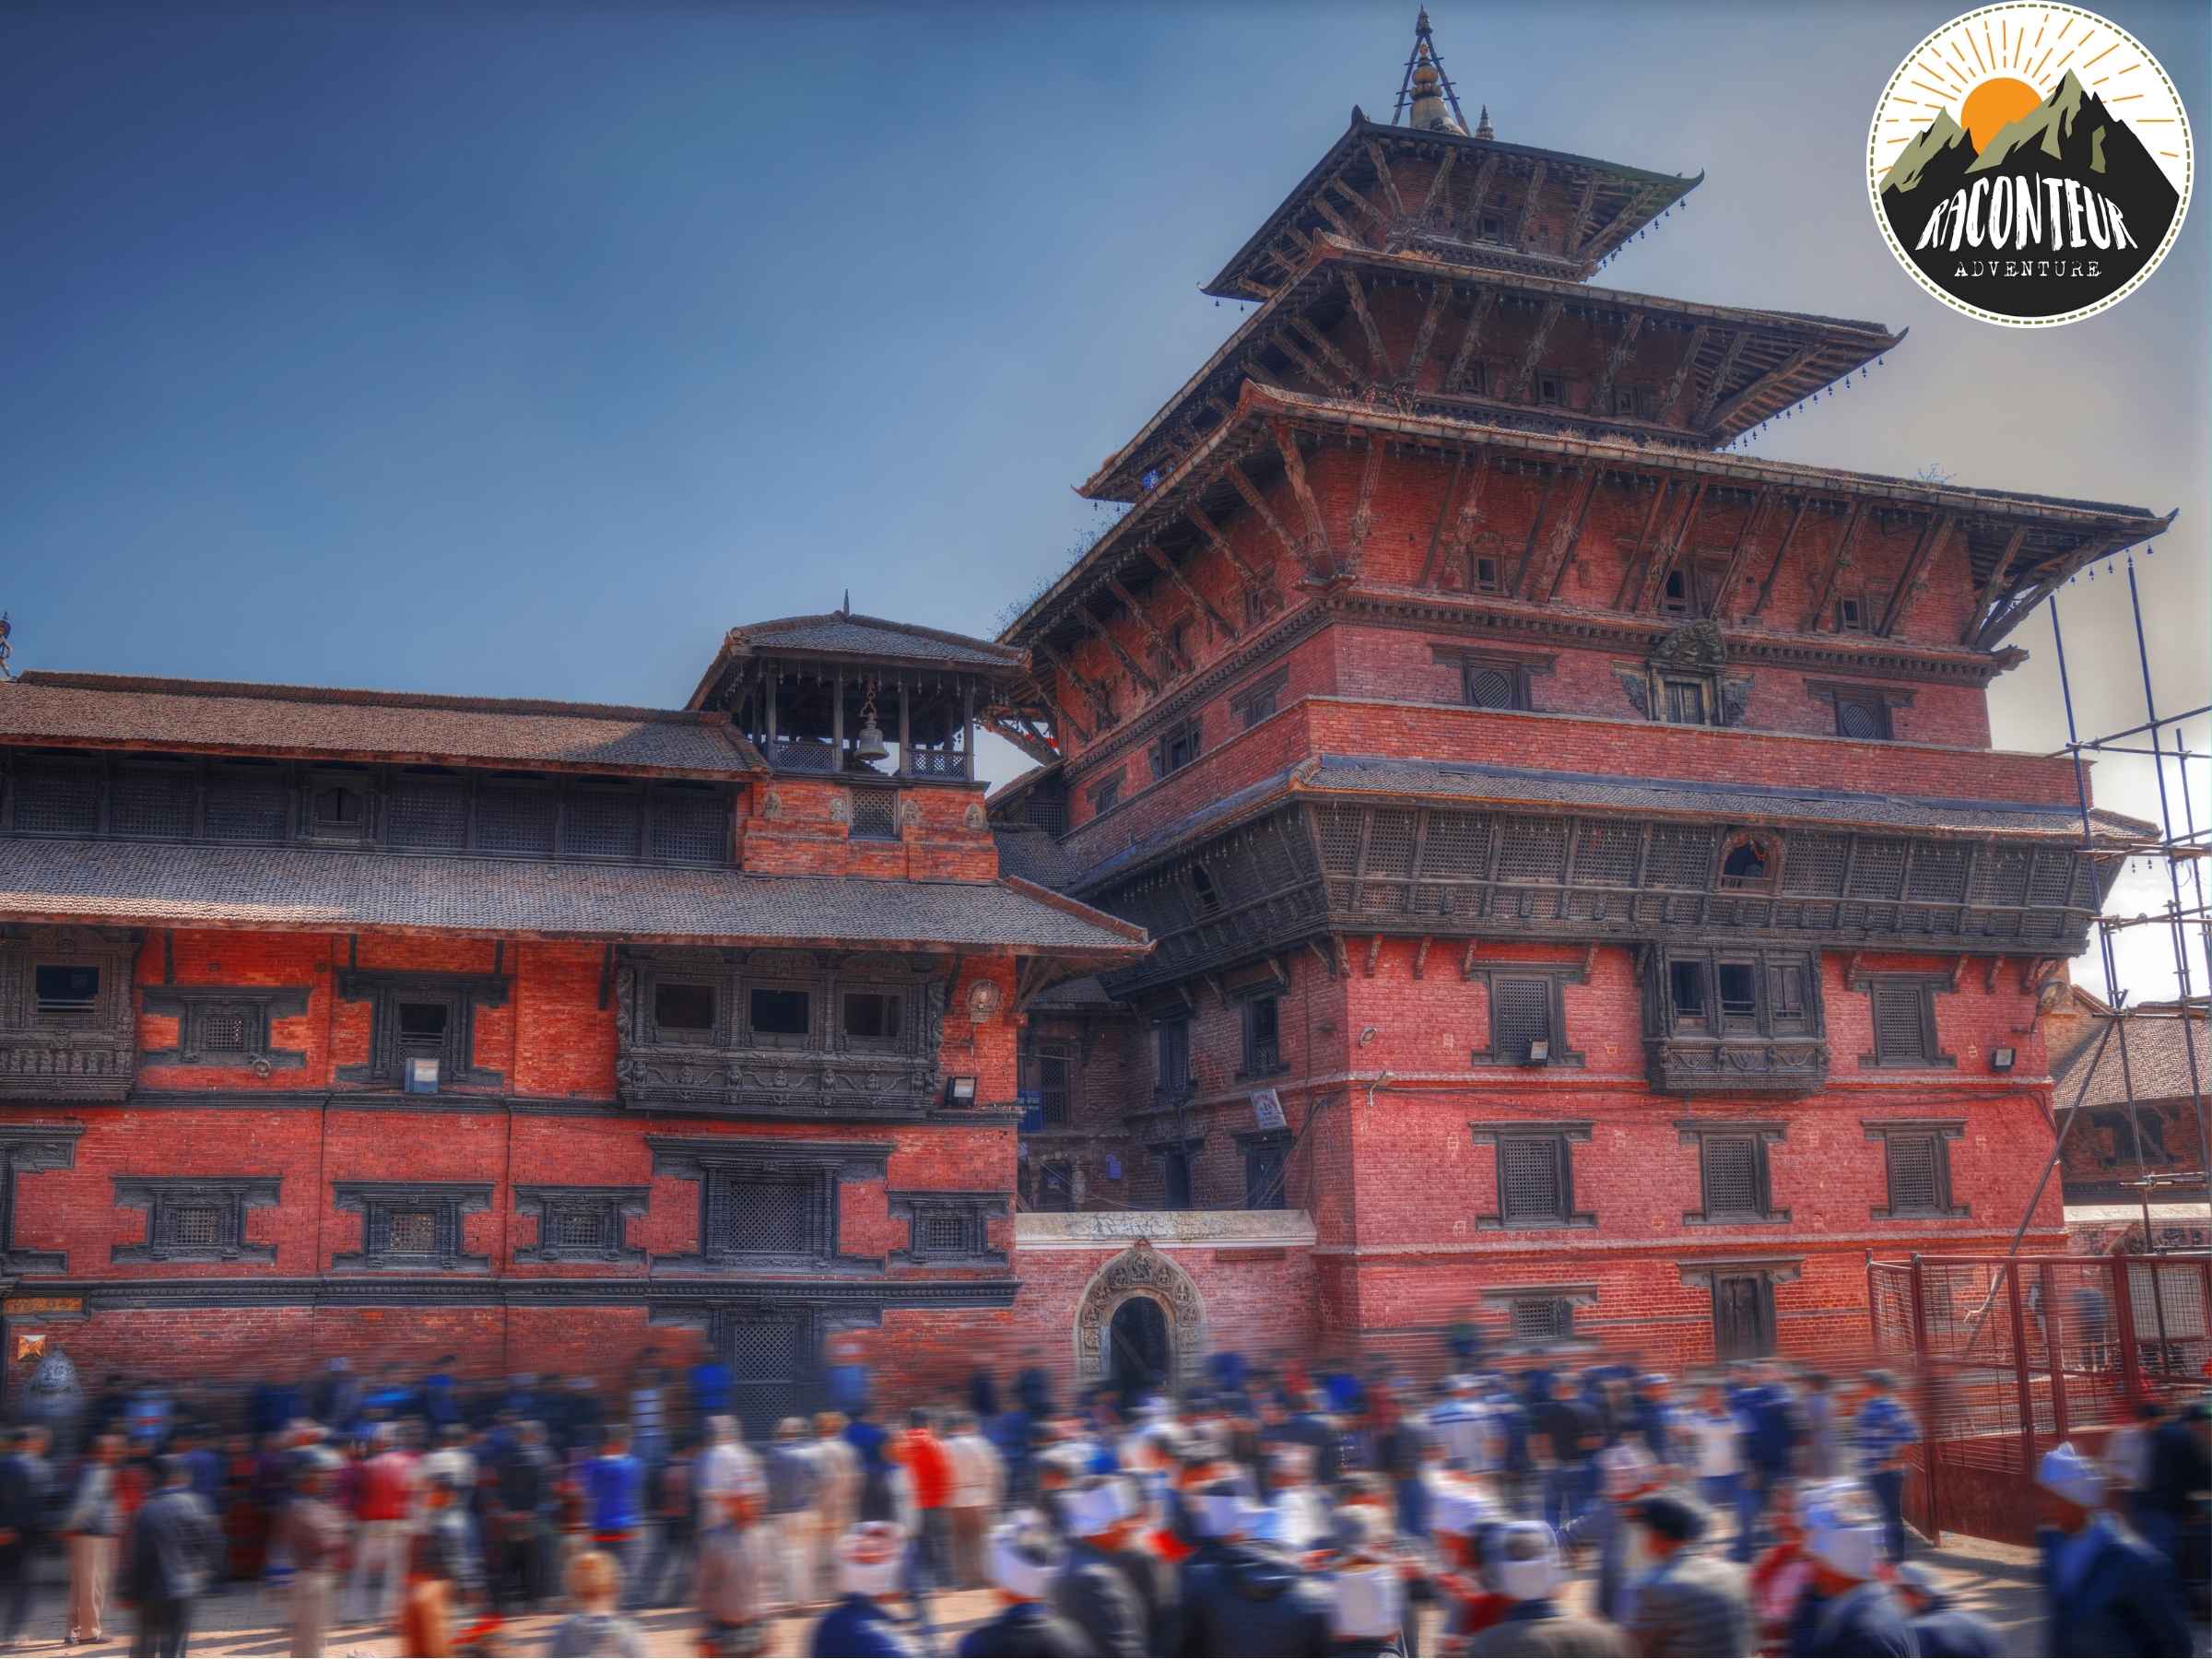 Kathmandu Heritage Cycling